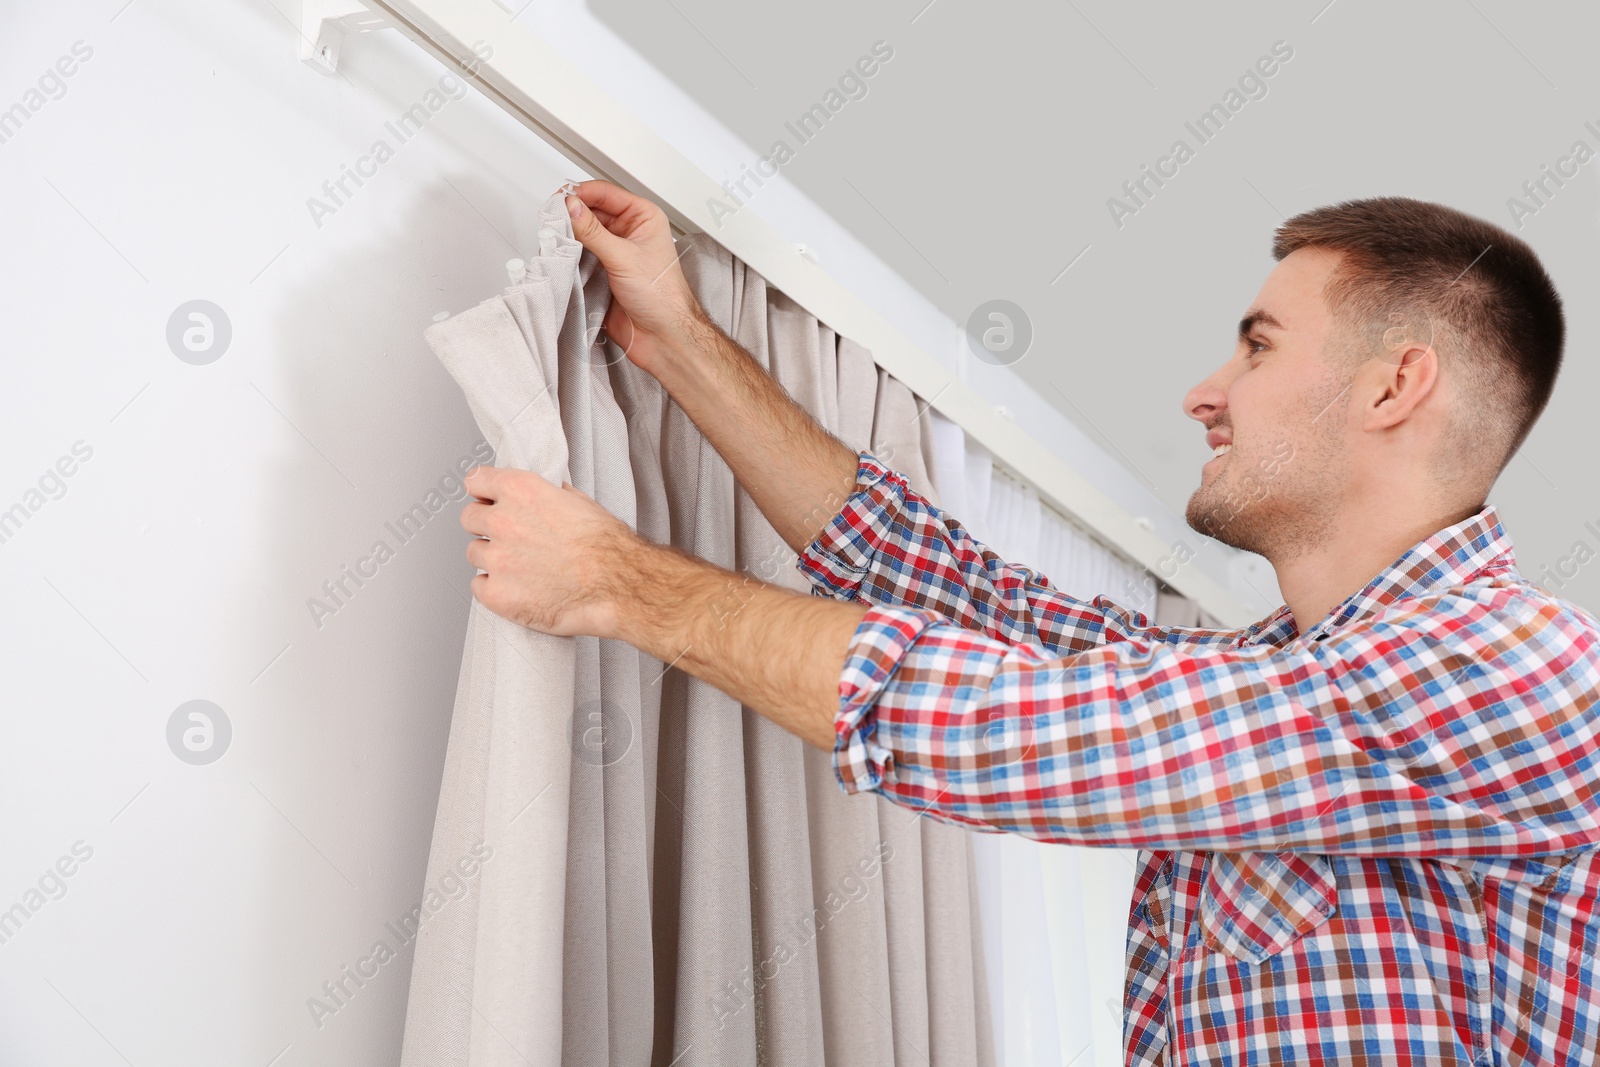 Photo of Man hanging window curtain indoors. Interior decor element